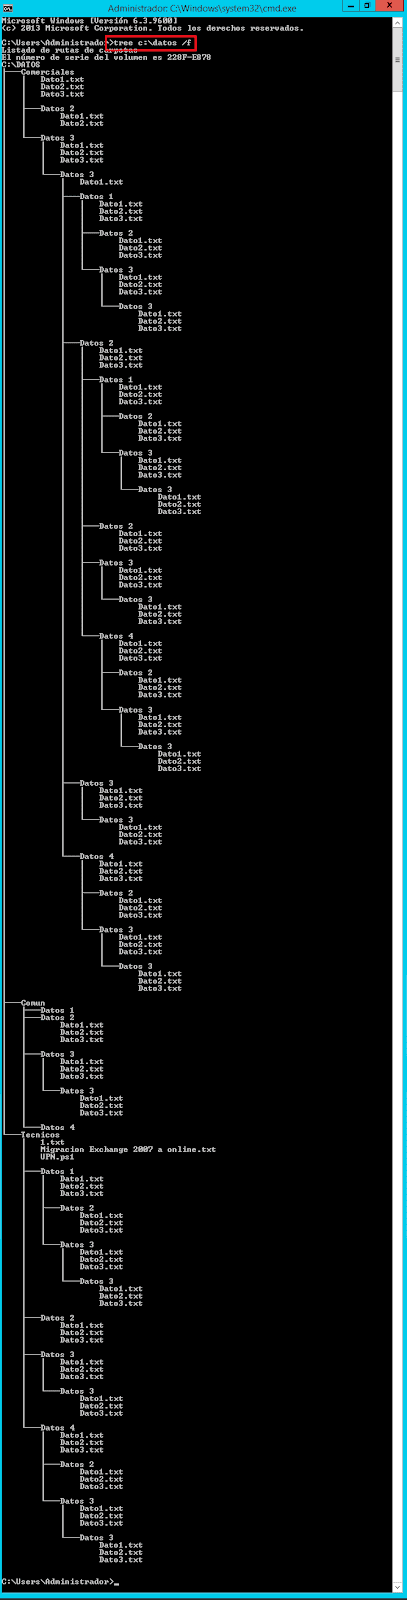 Microsoft Windows CMD: TREE listar Árbol de directorios. - tree c:\datos /f